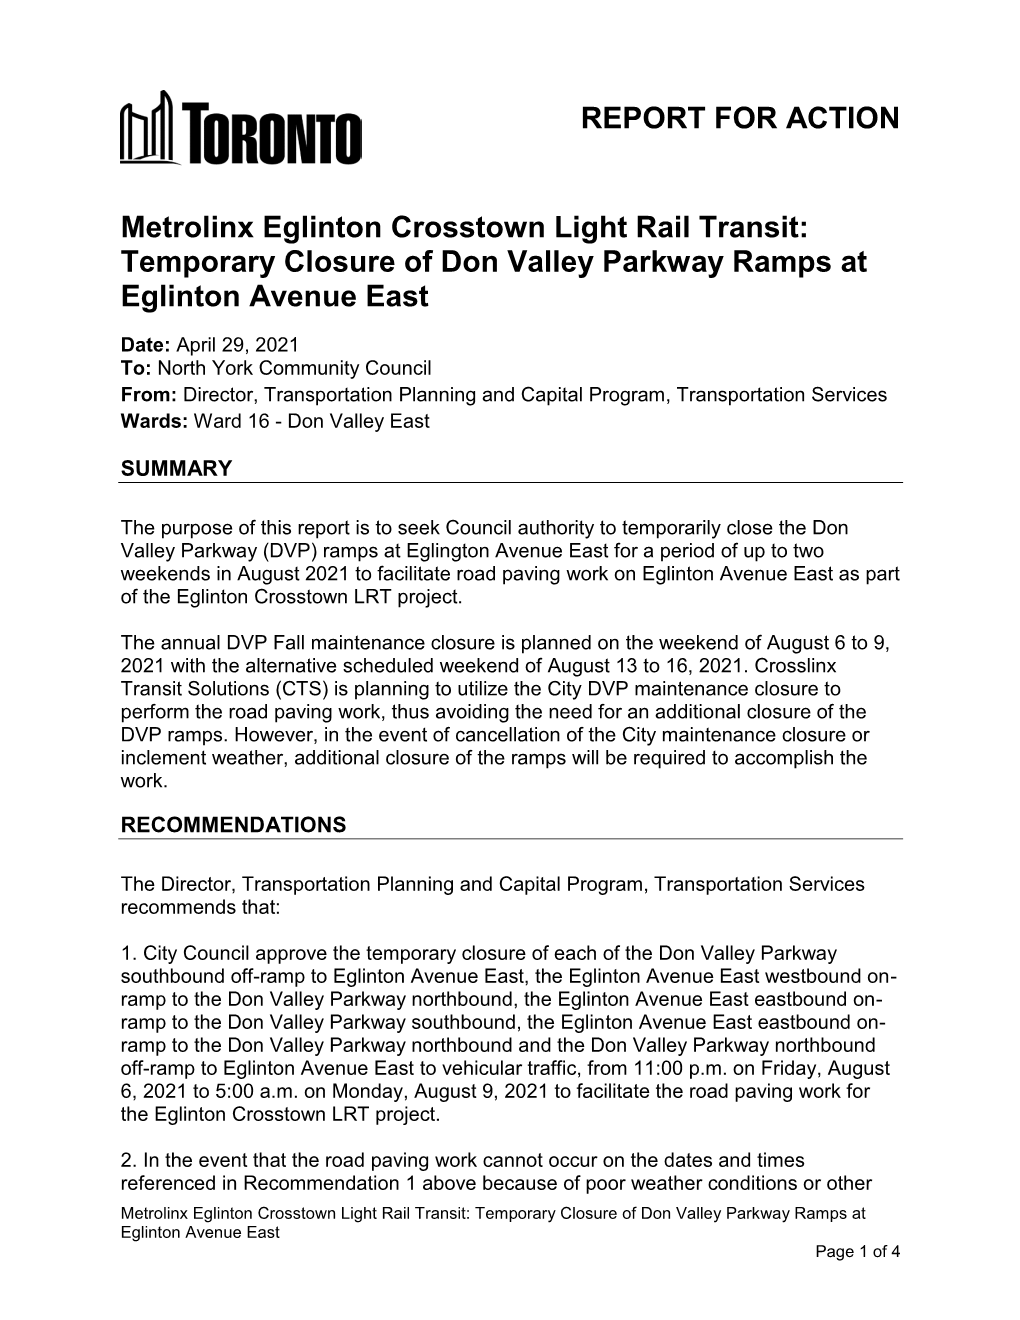 Metrolinx Eglinton Crosstown Light Rail Transit: Temporary Closure of Don Valley Parkway Ramps at Eglinton Avenue East